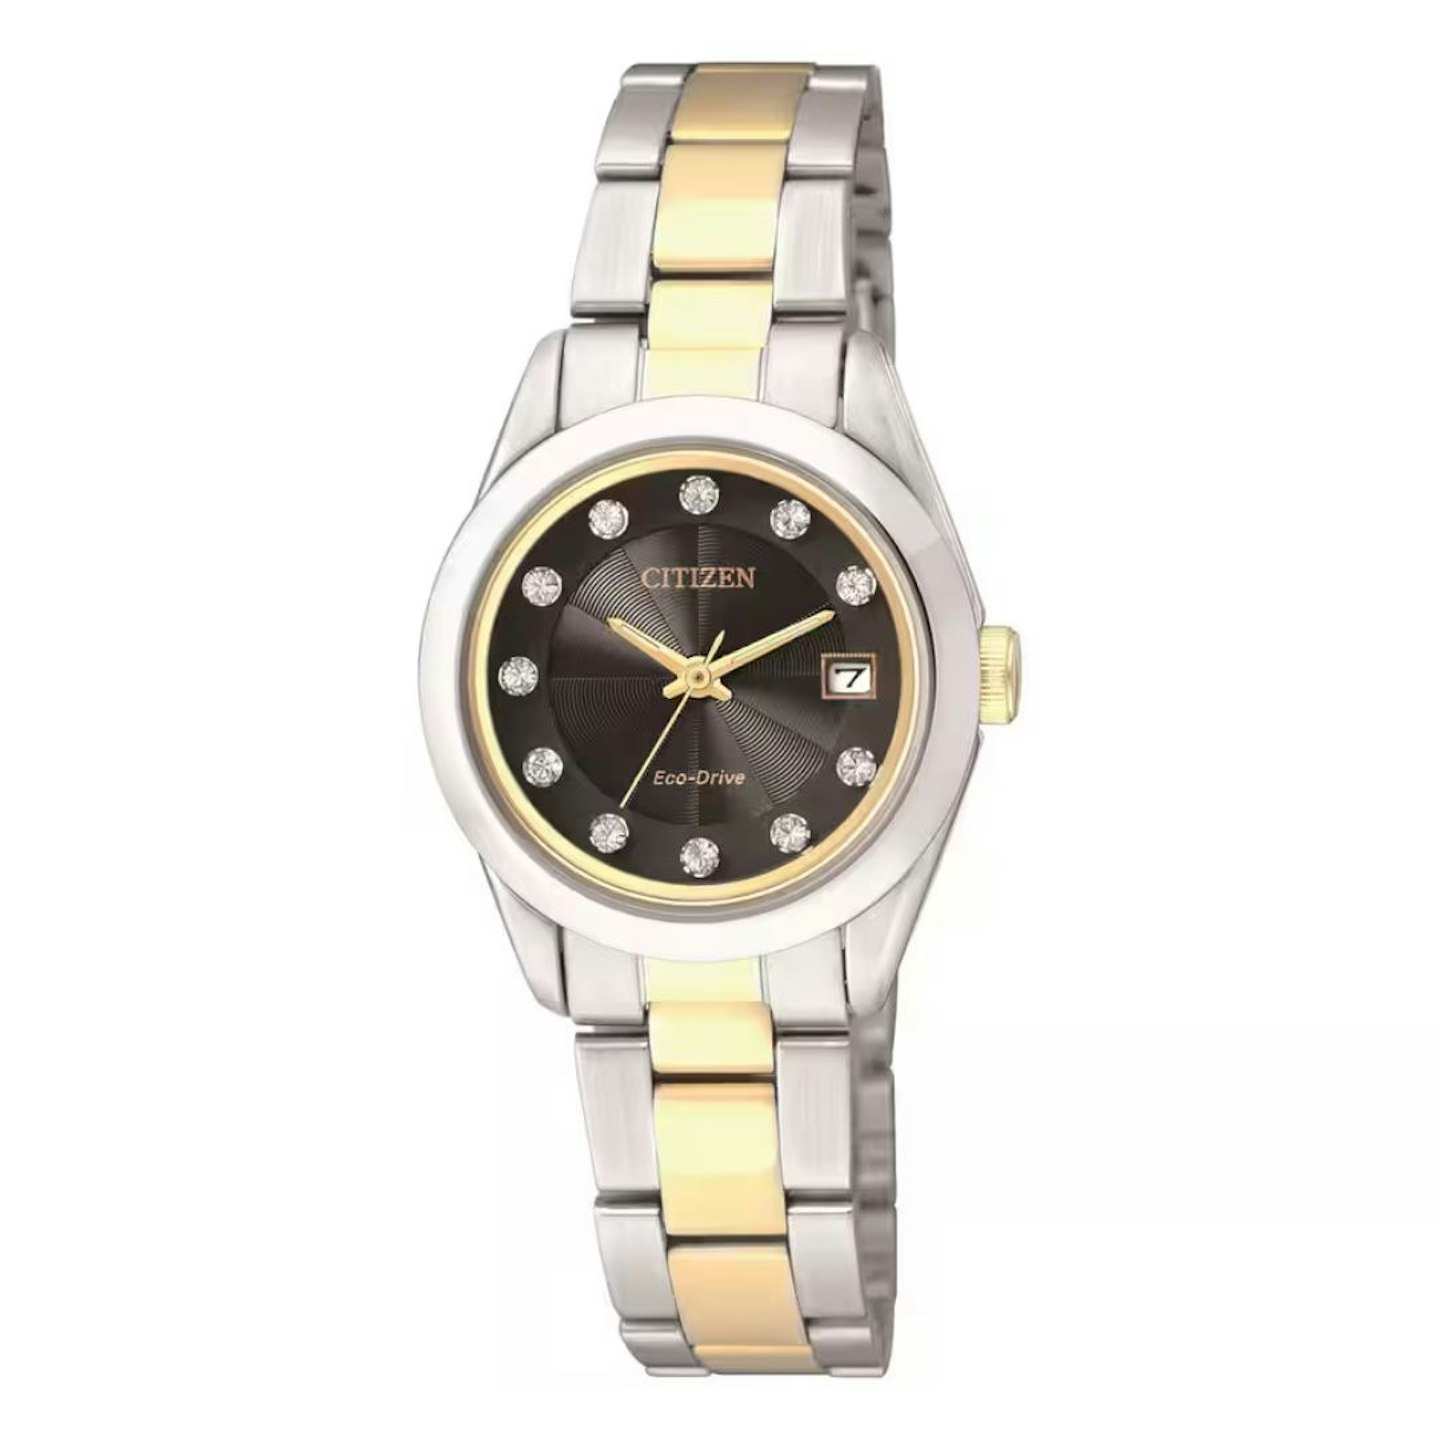 The best Argos deals: Citizen Ladies Two Tone Stainless Steel Bracelet Watch